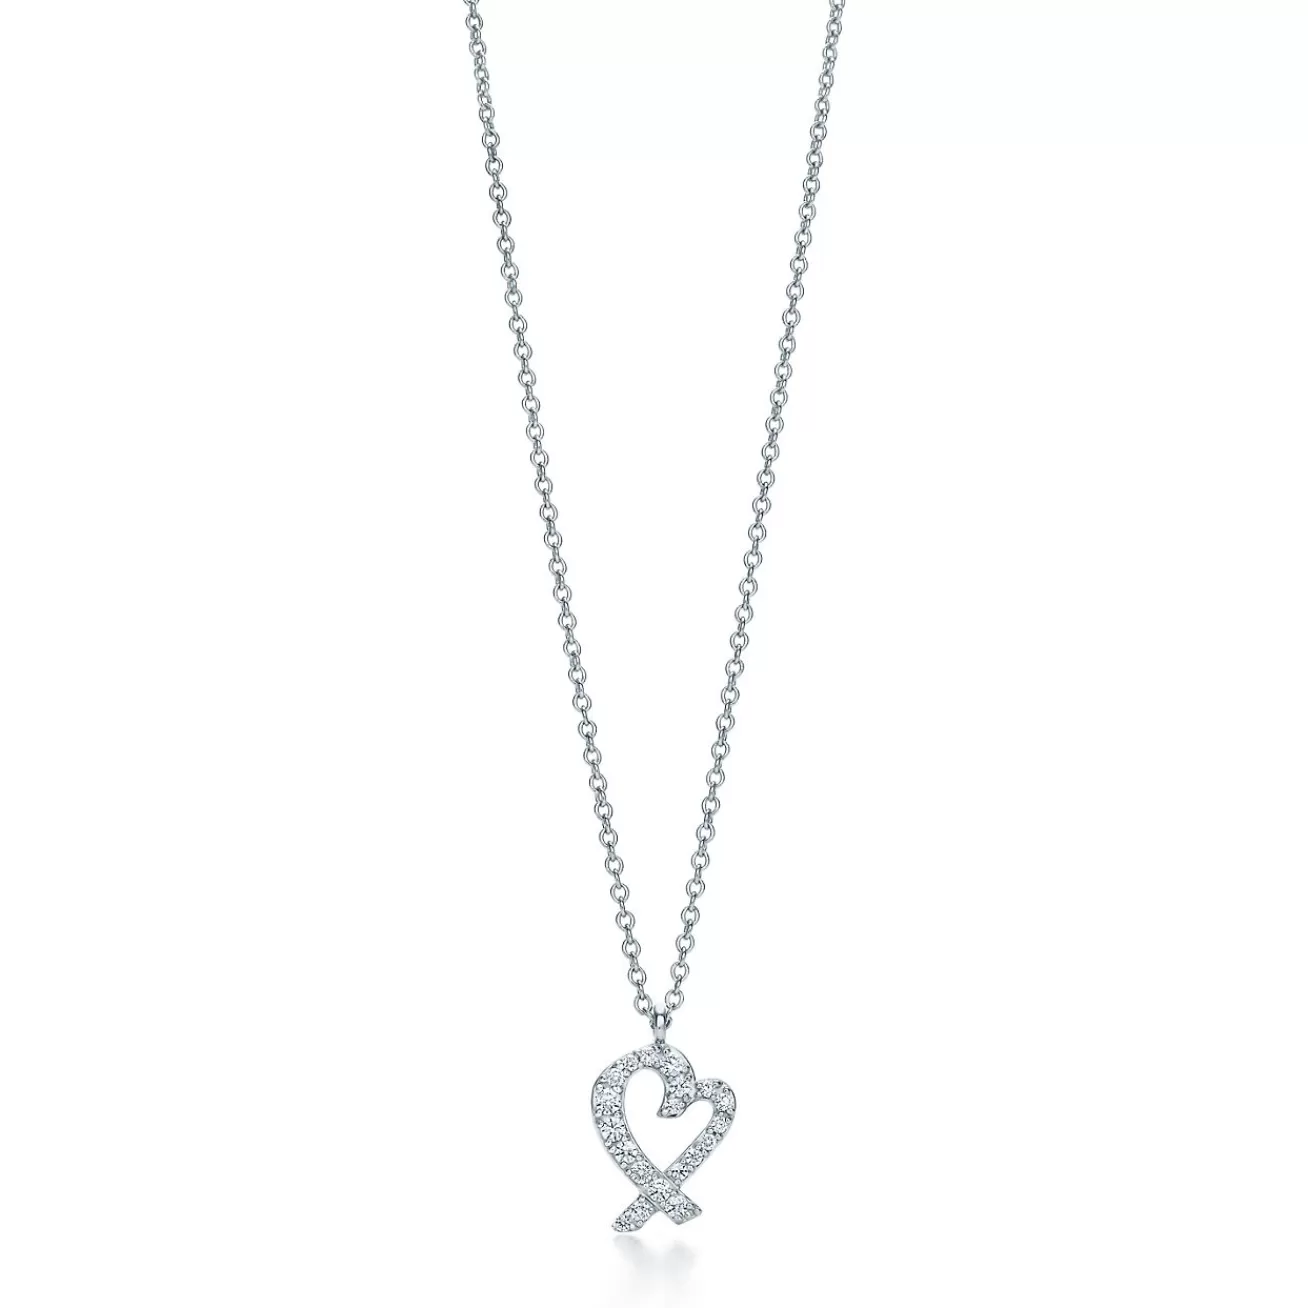 Tiffany & Co. Paloma Picasso® Loving Heart pendant in 18k white gold with diamonds. | ^ Necklaces & Pendants | Diamond Jewelry